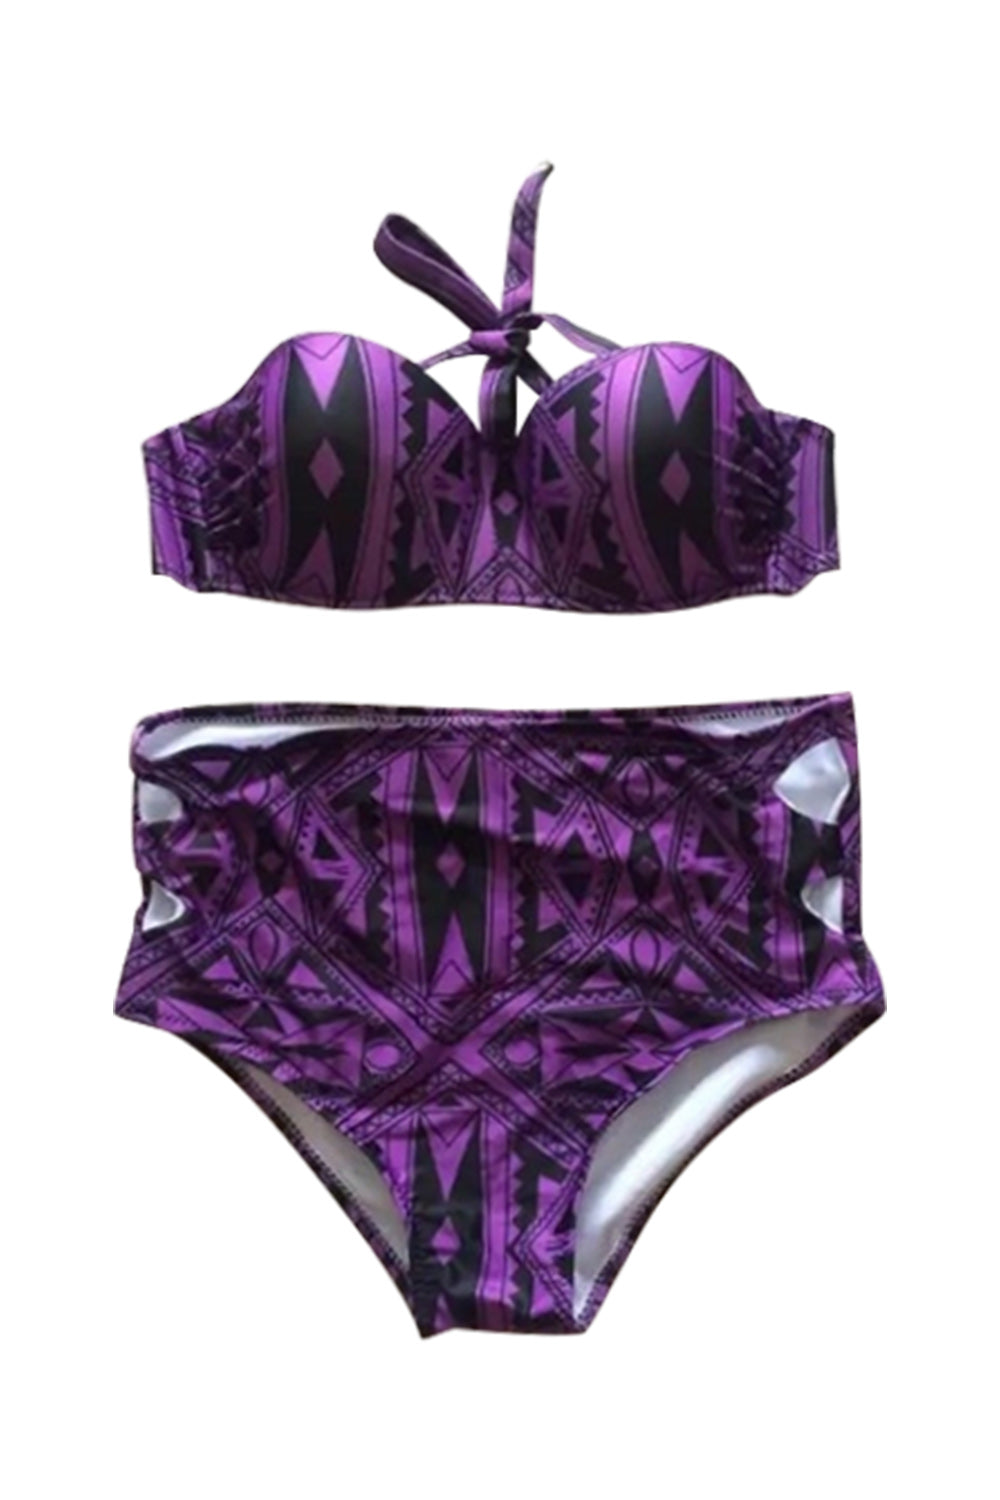 Iyasson Drizzle Bohemia Print With High-waisted fit Bikini Set